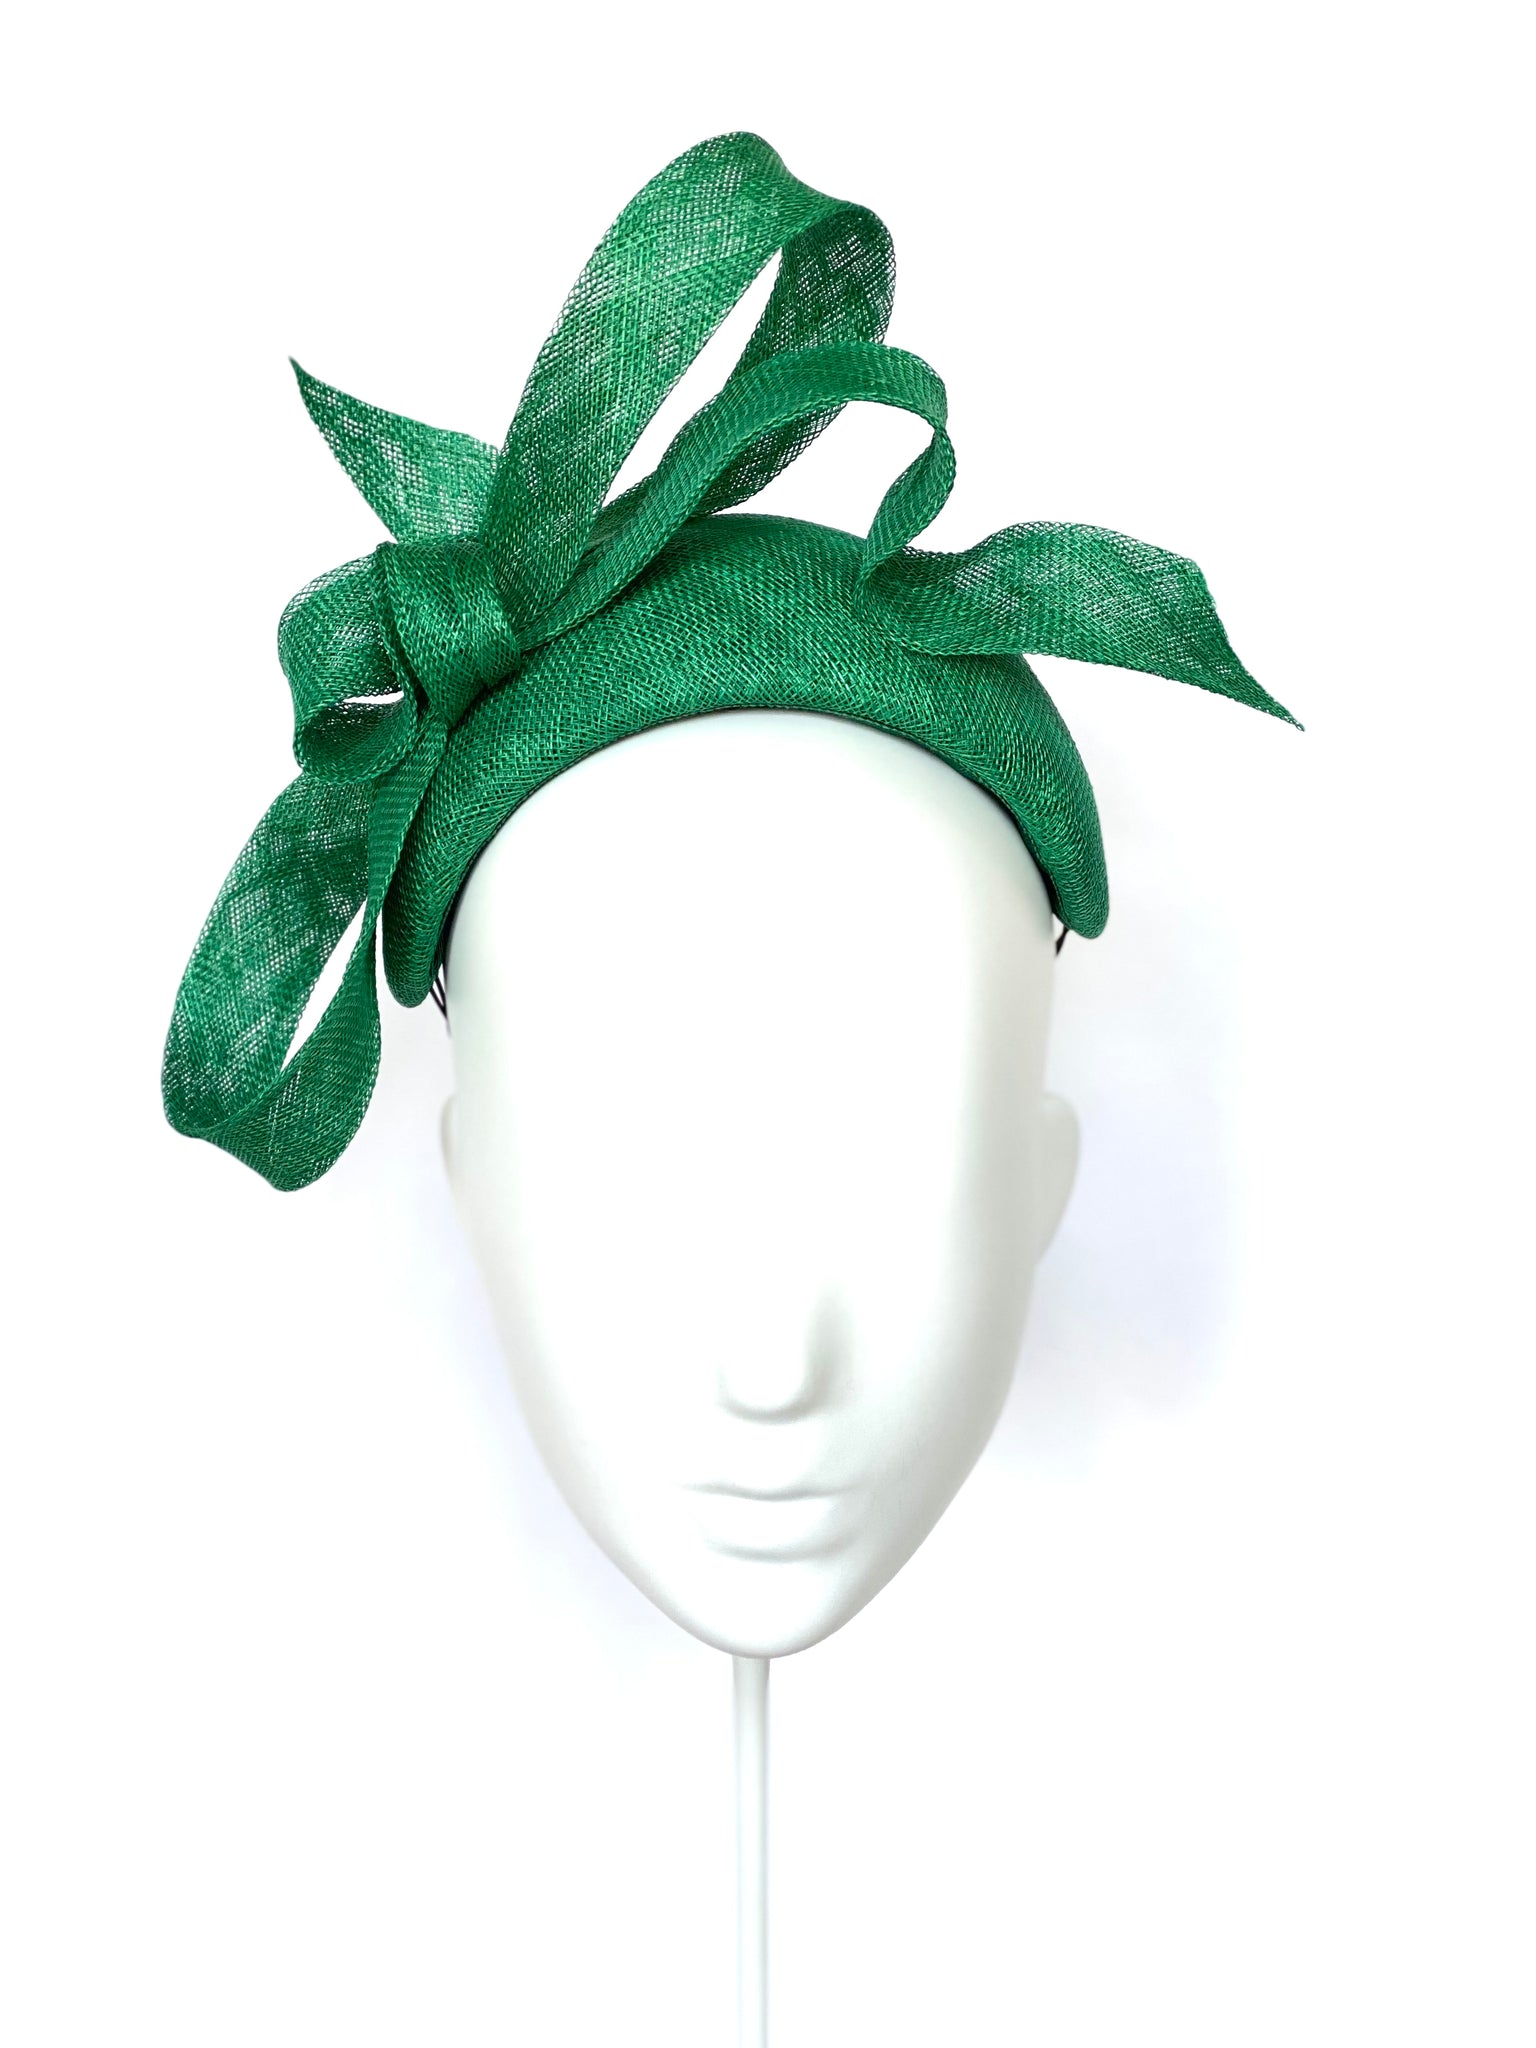 Designer hat Emerald Bandeau by Louise Macdonald Milliner (Melbourne, Australia)